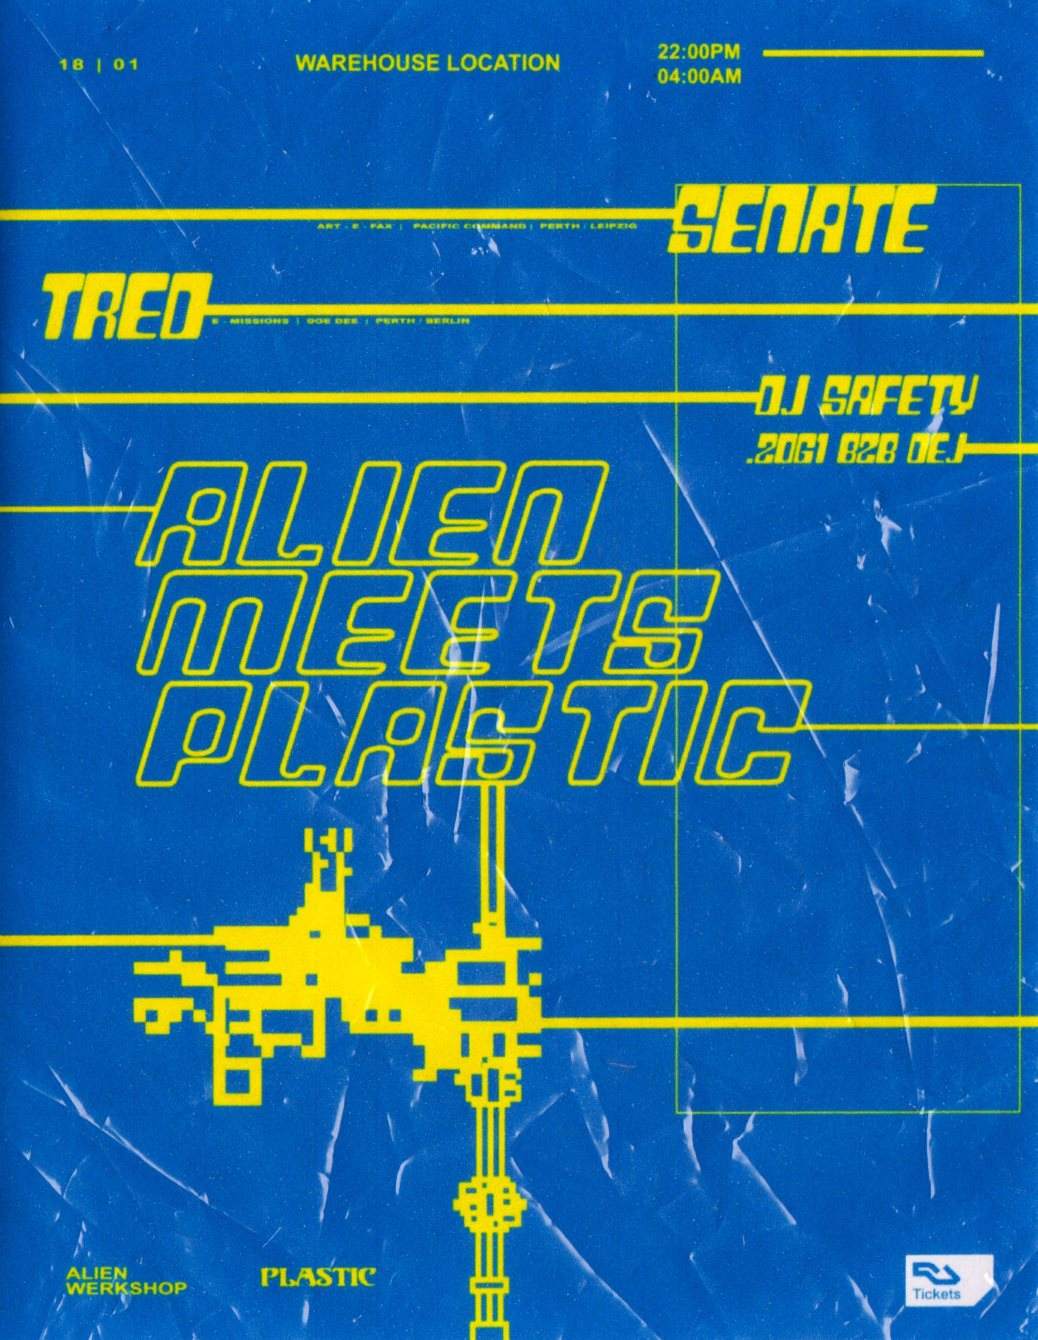 Alien Werkshop x Plastic Feat. Senate and Tred - フライヤー表